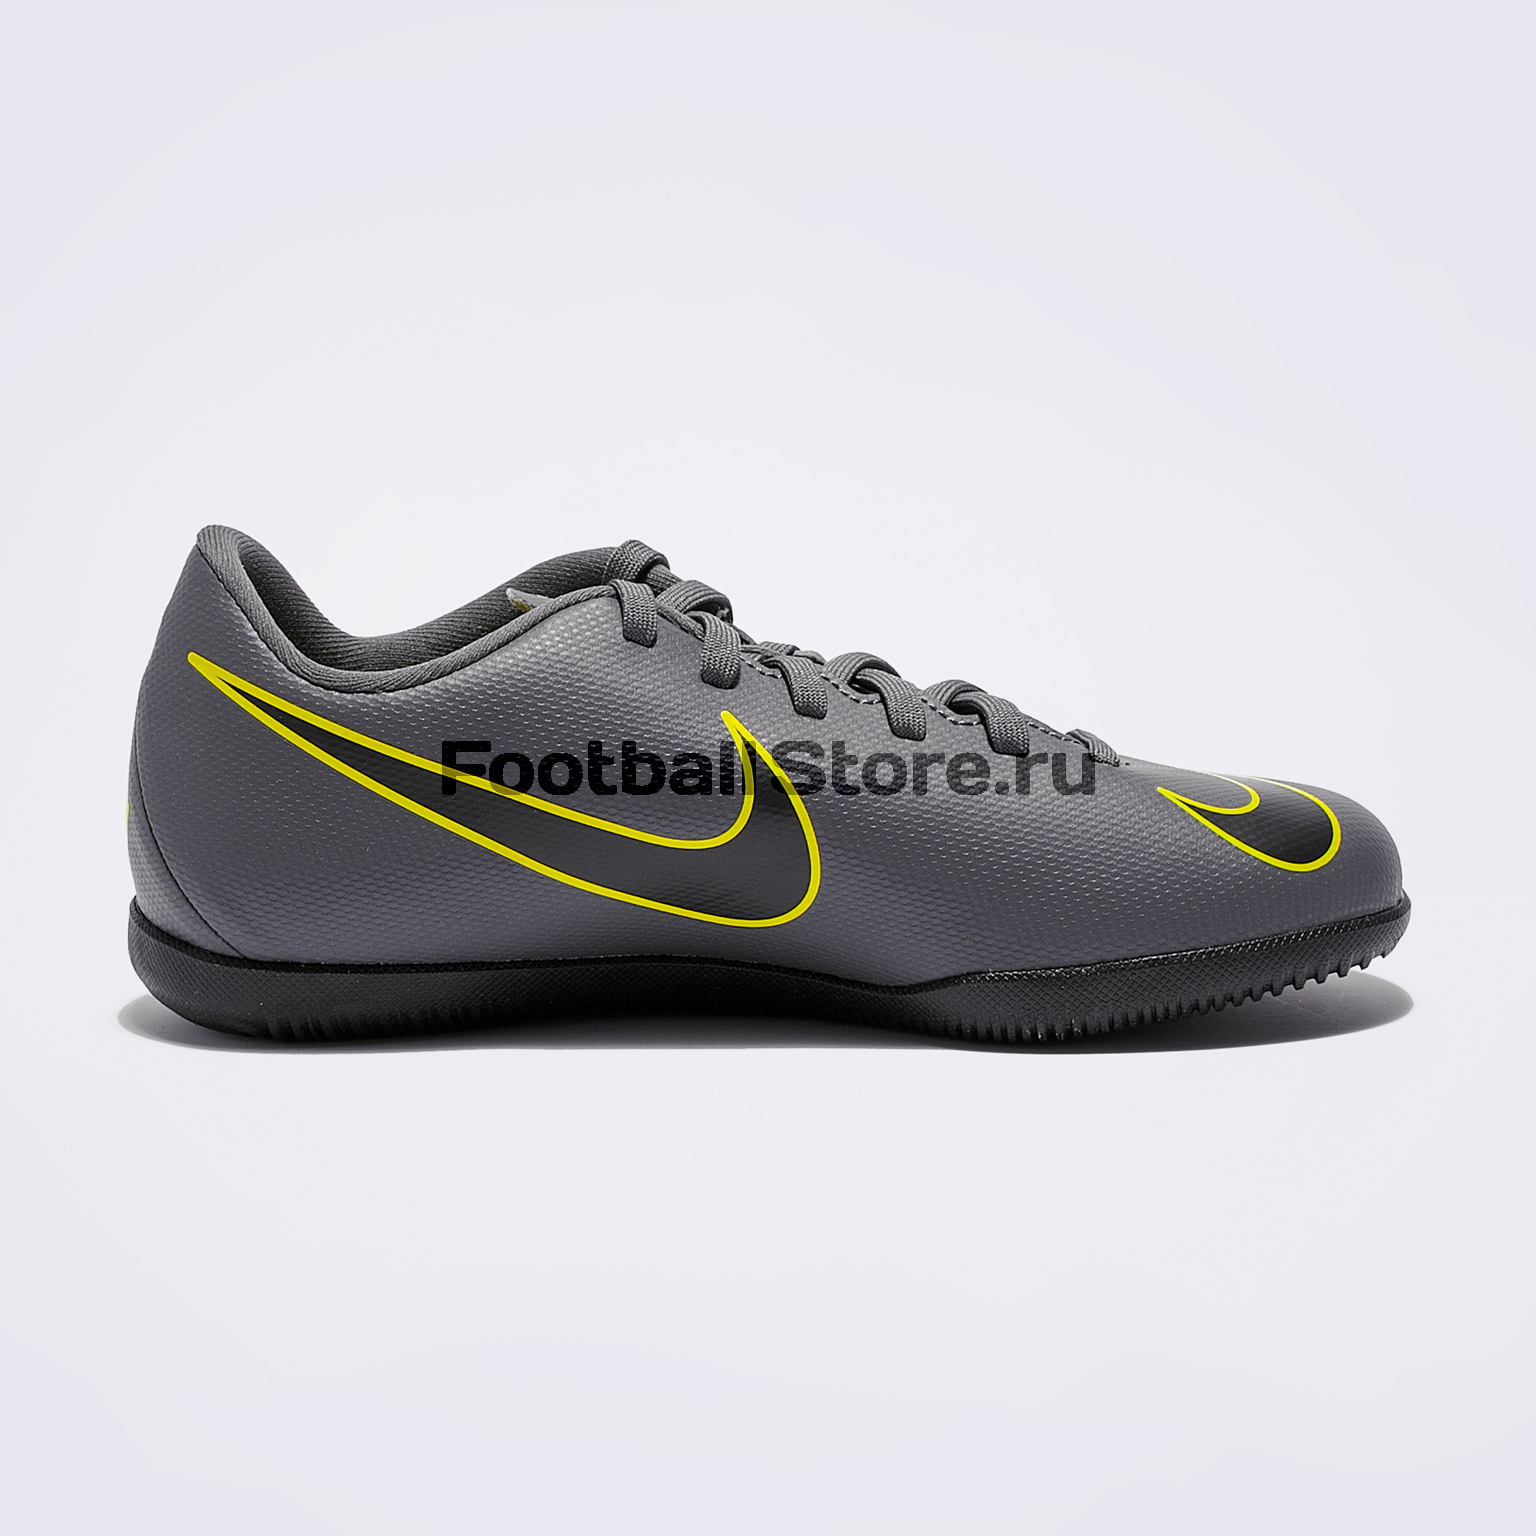 Футзалки детские Nike Vapor 12 Club GS IC AH7354-070